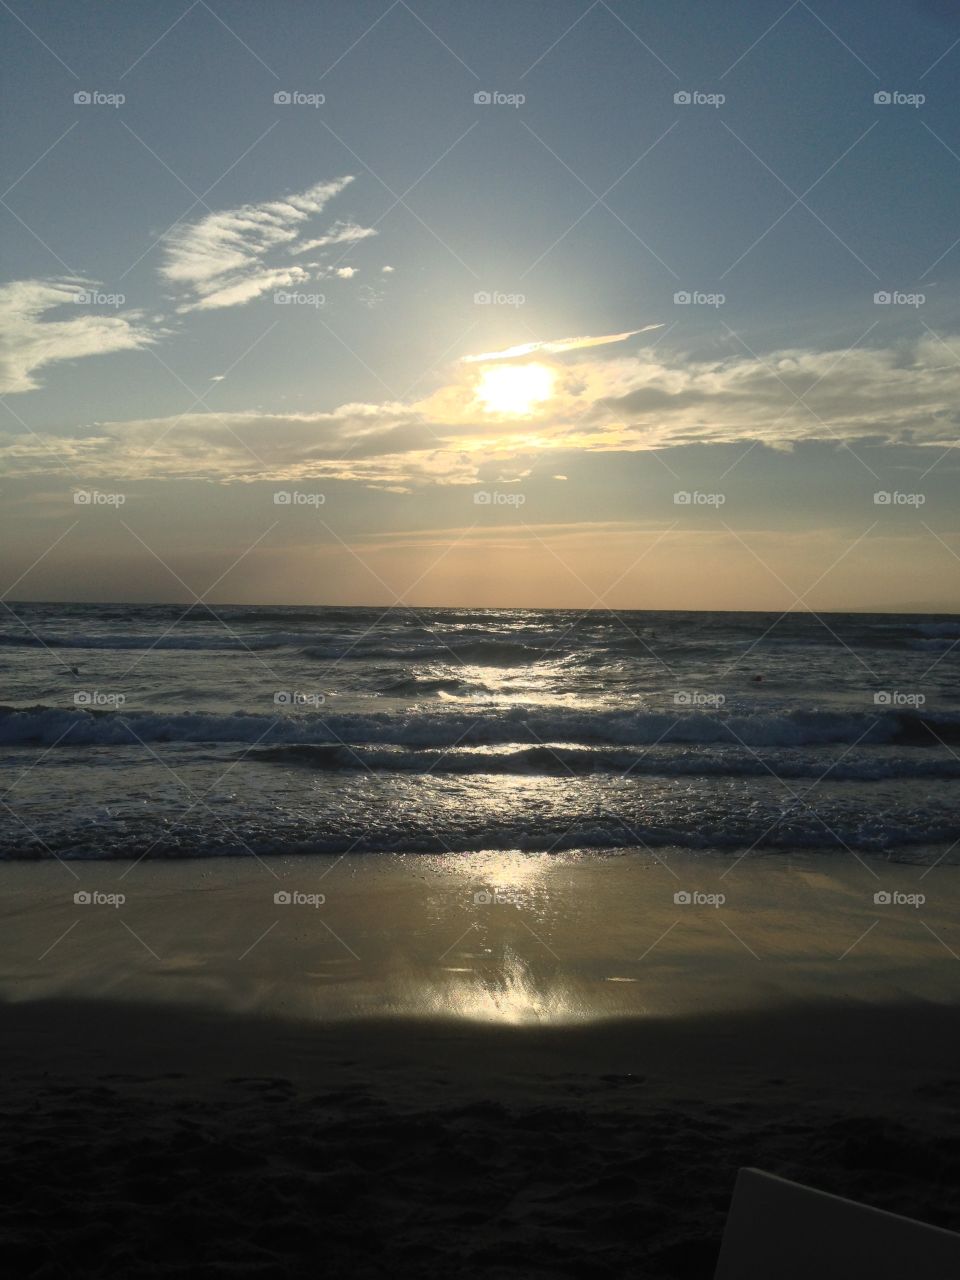 Sand. Sea. Sky. Sun. Ascending climax of S.